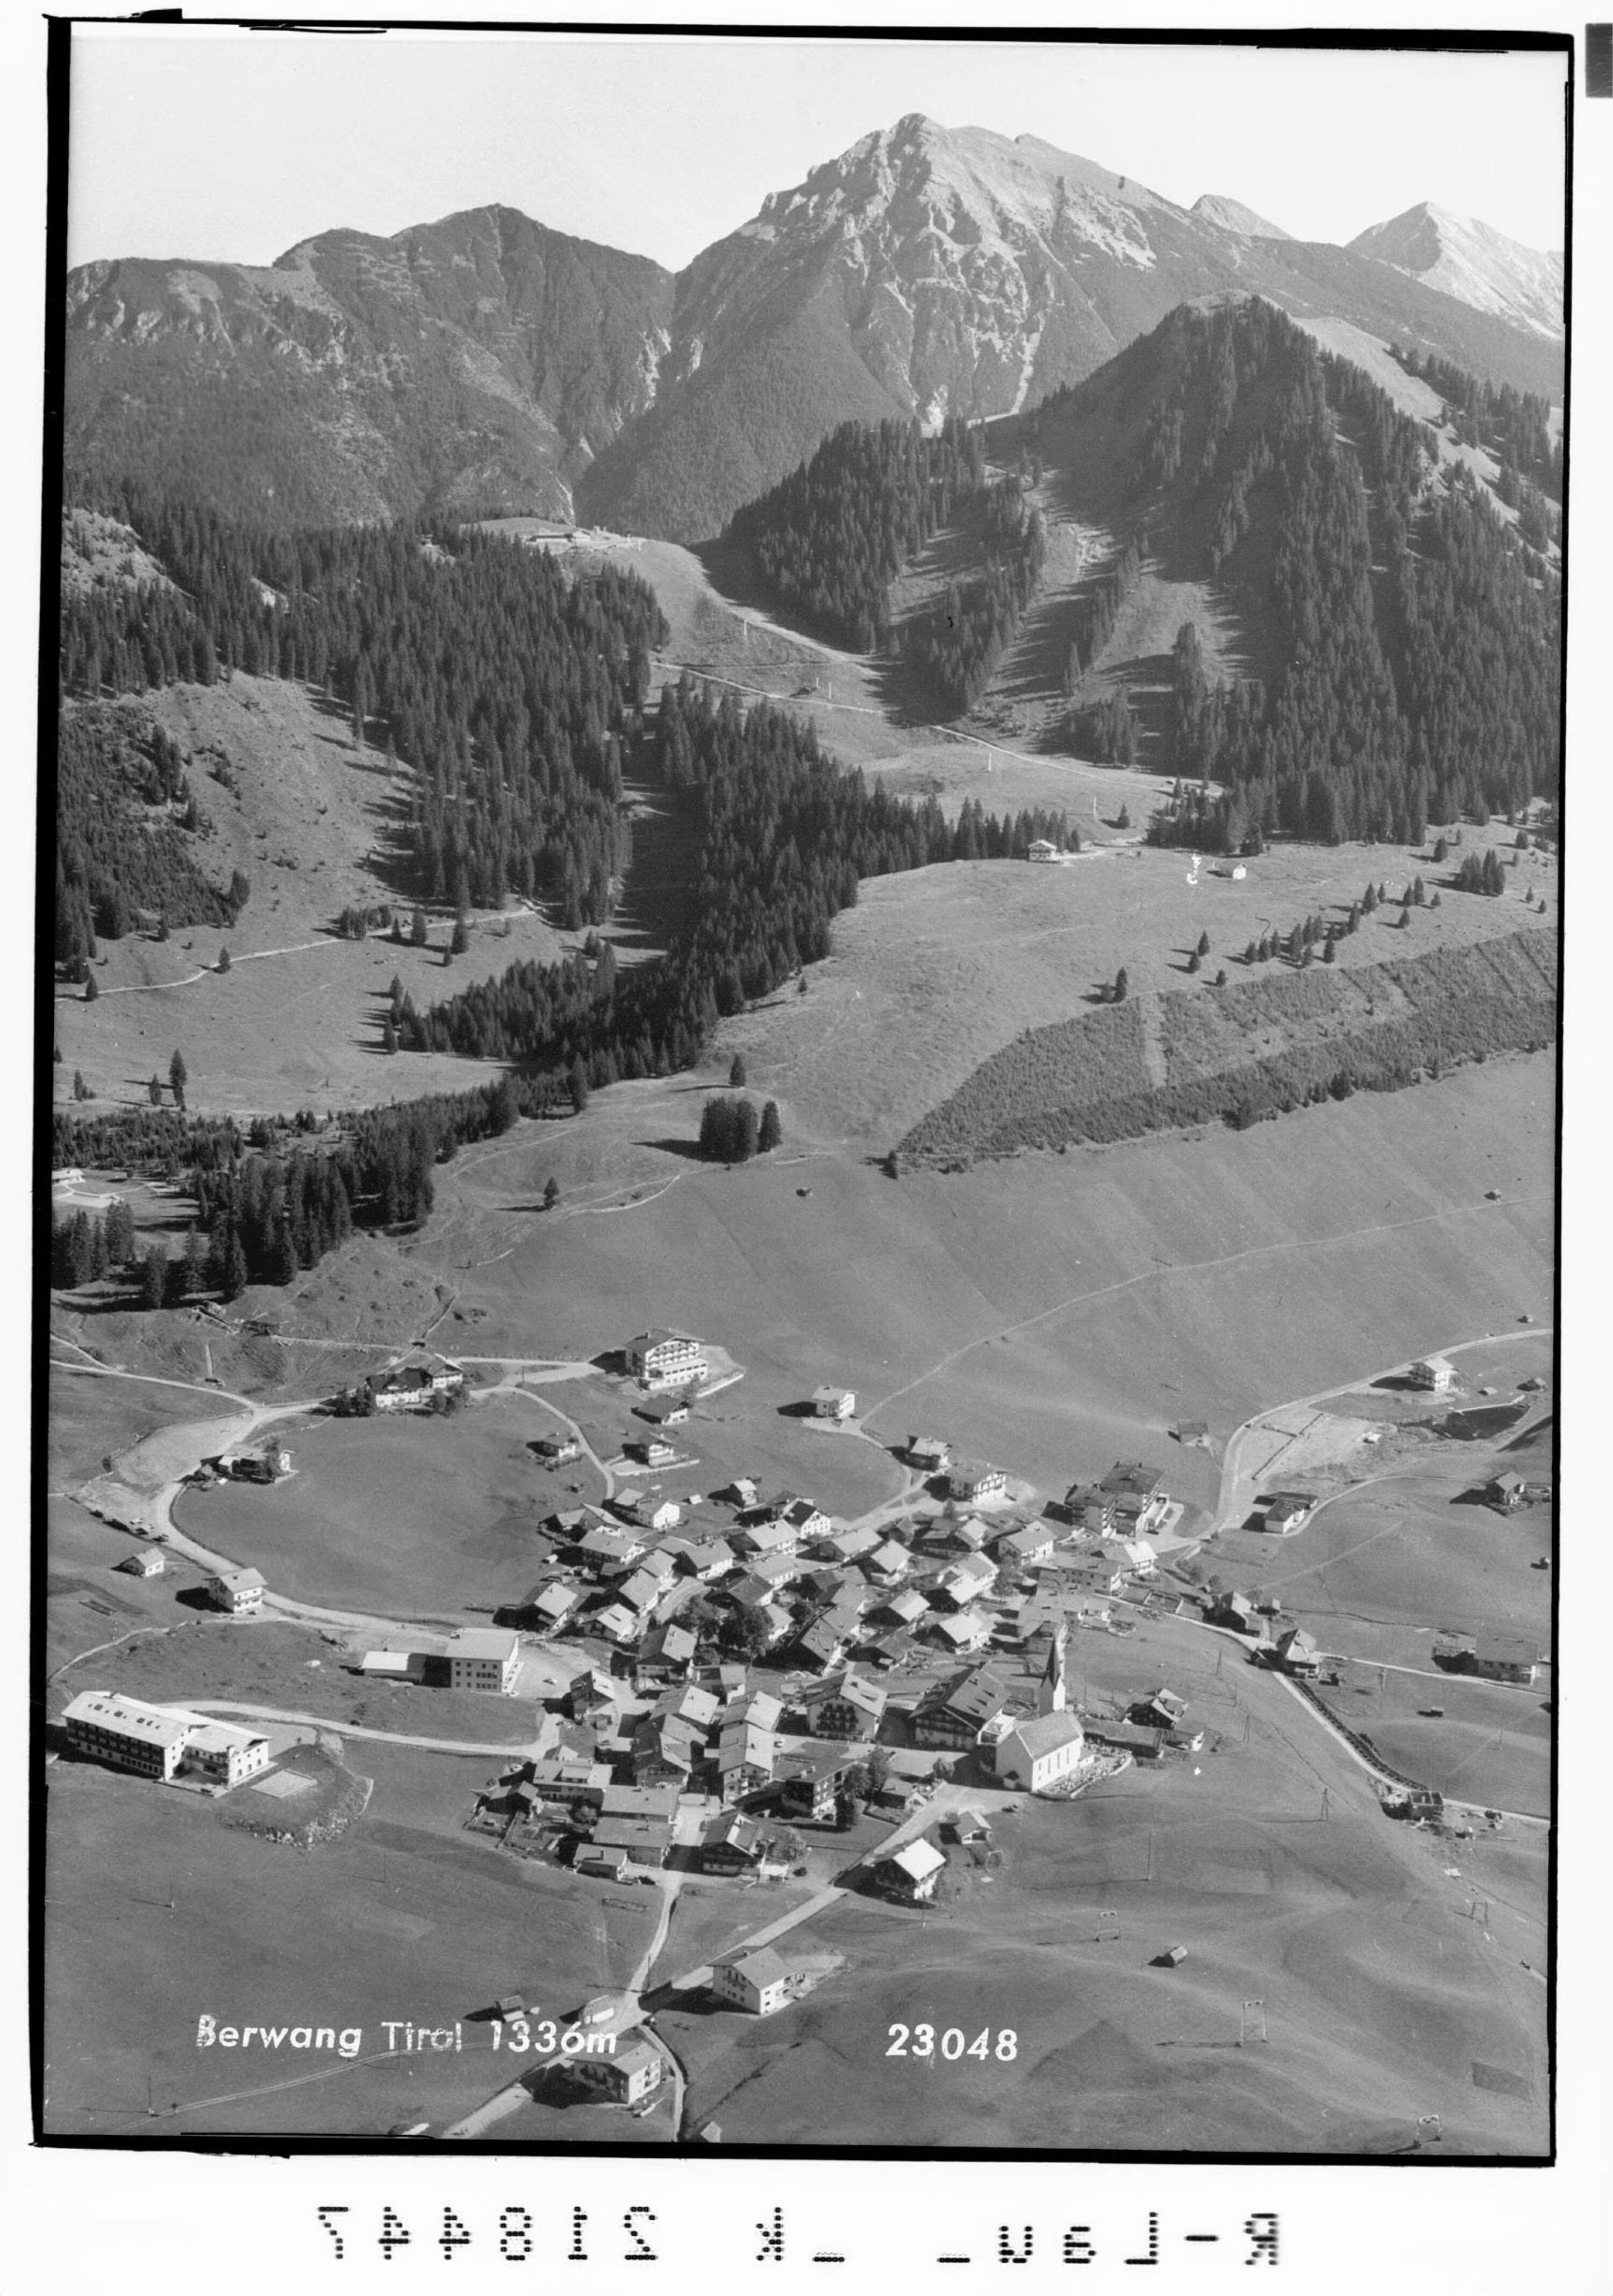 Berwang Tirol 1336 m></div>


    <hr>
    <div class=